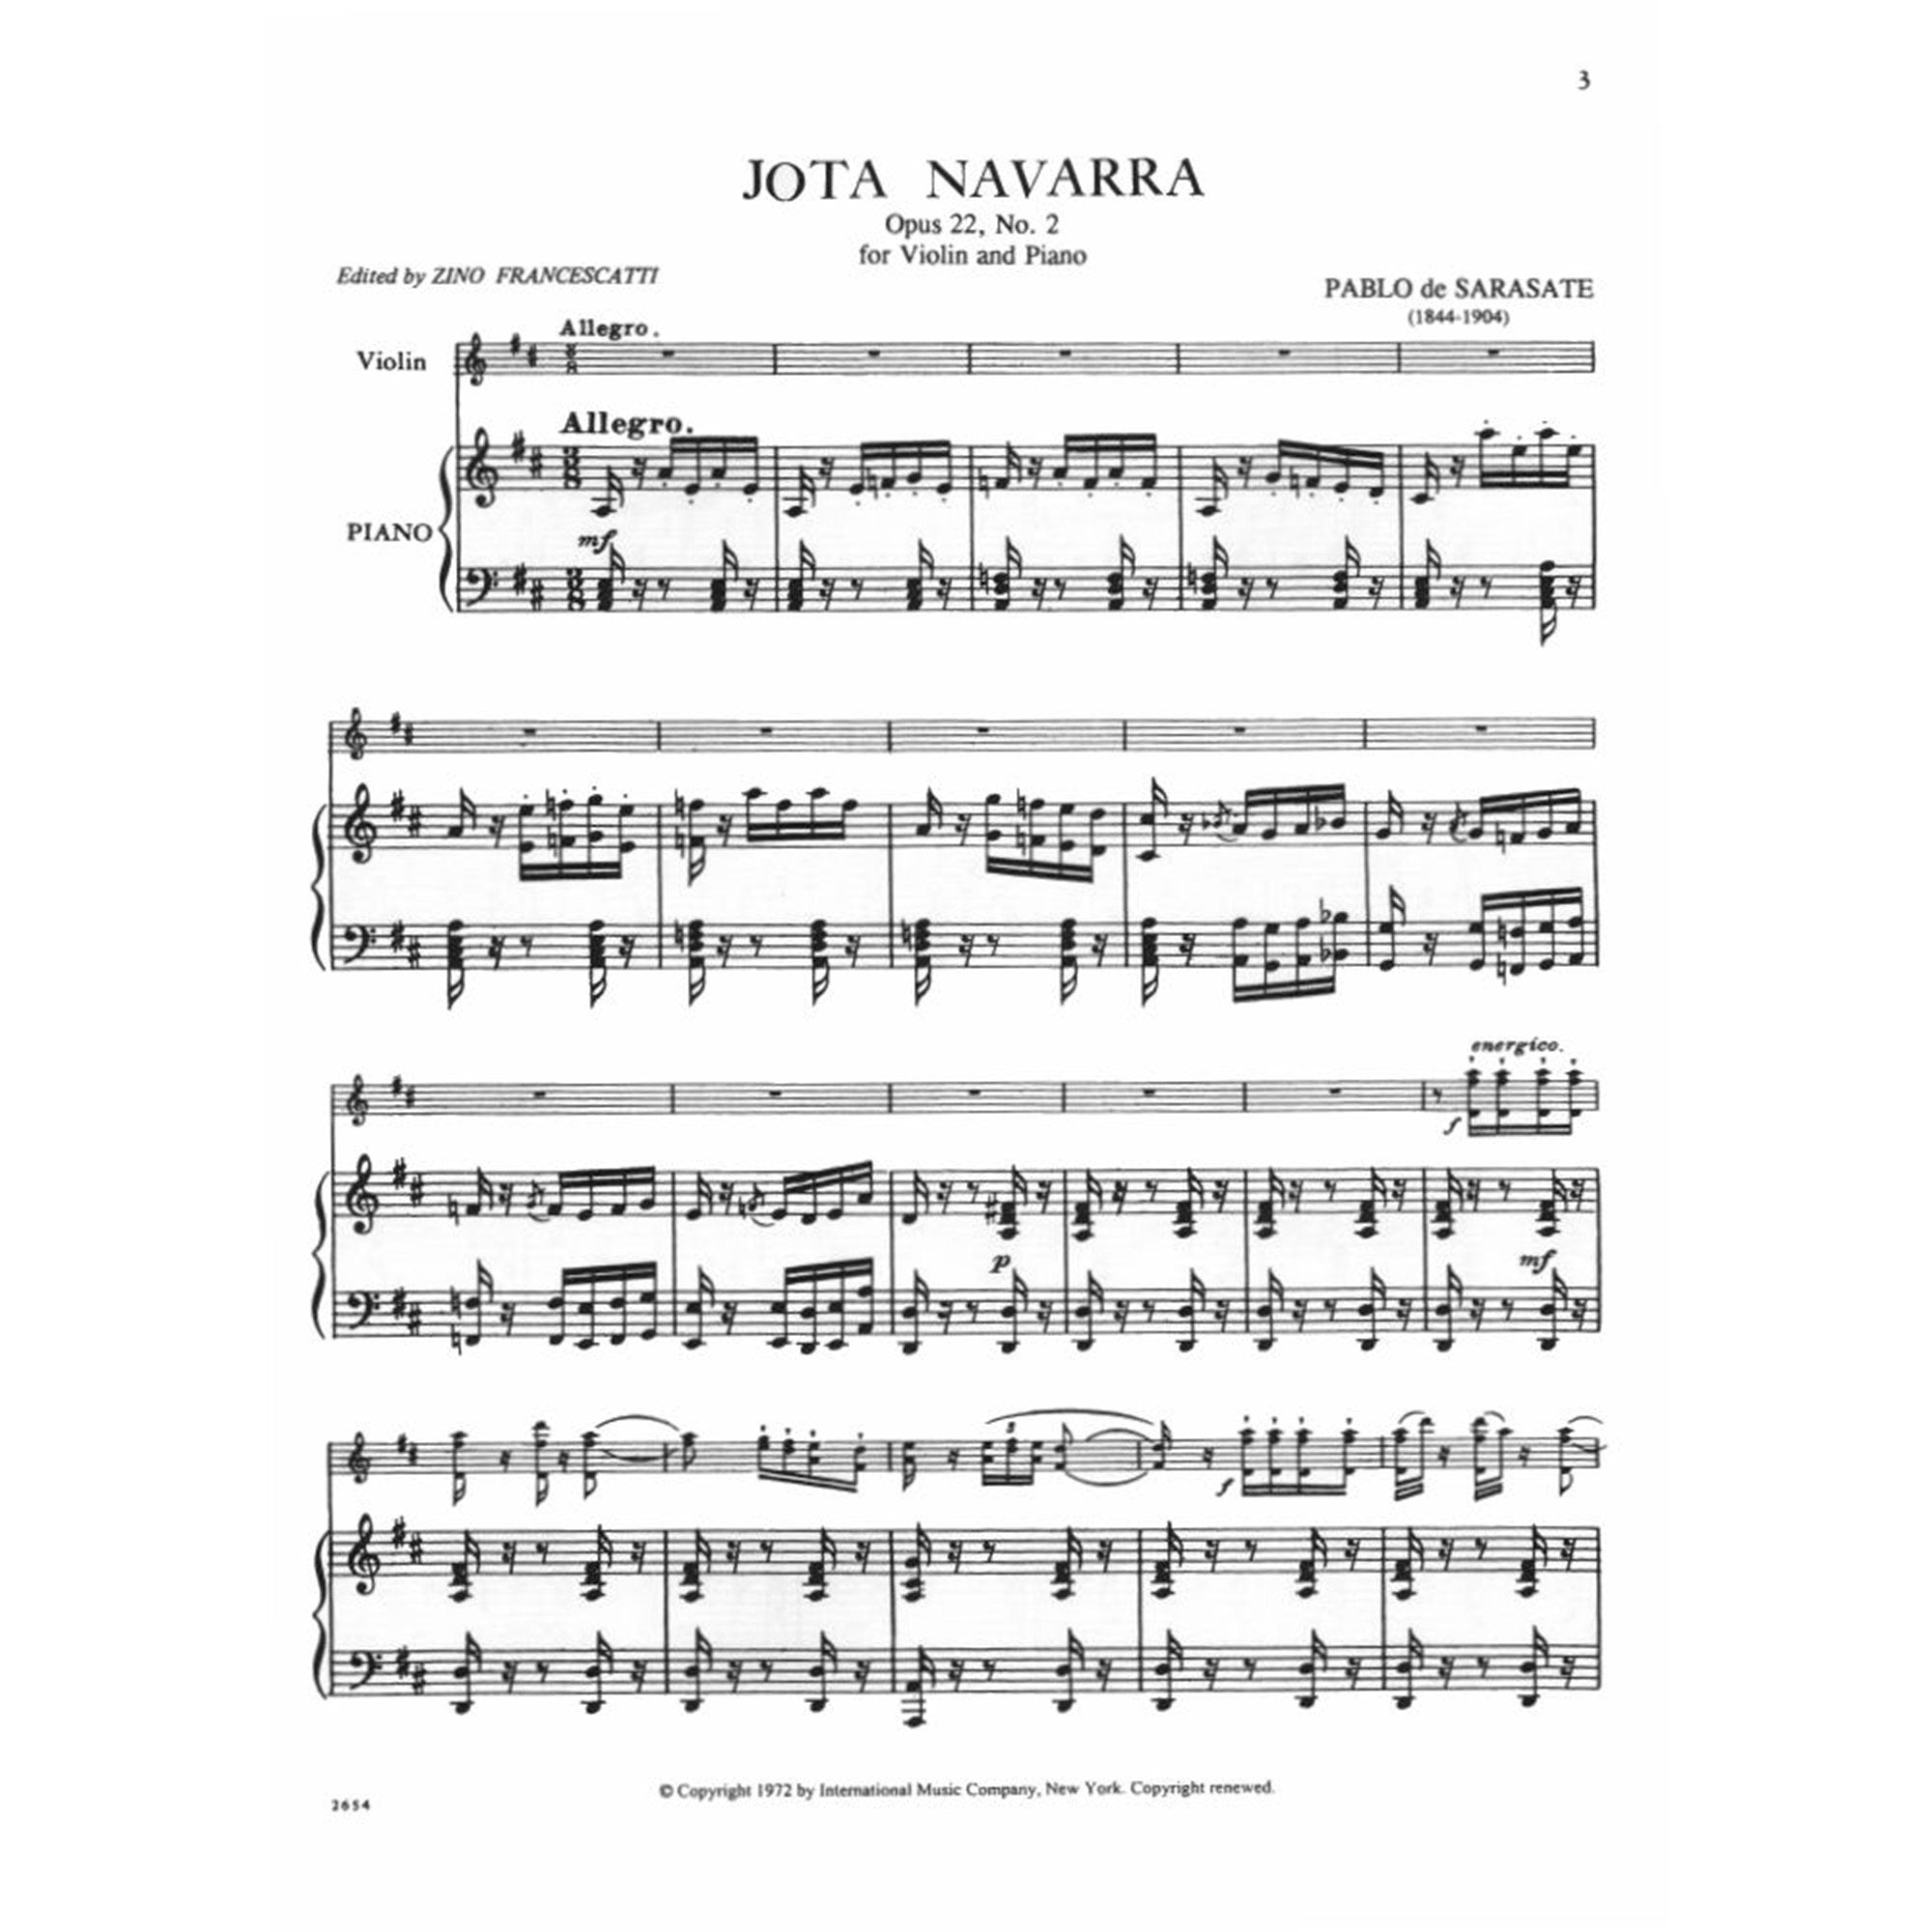 Sarasate: Jota Navarra - Op. 22, No. 2 (Spanish Dances)